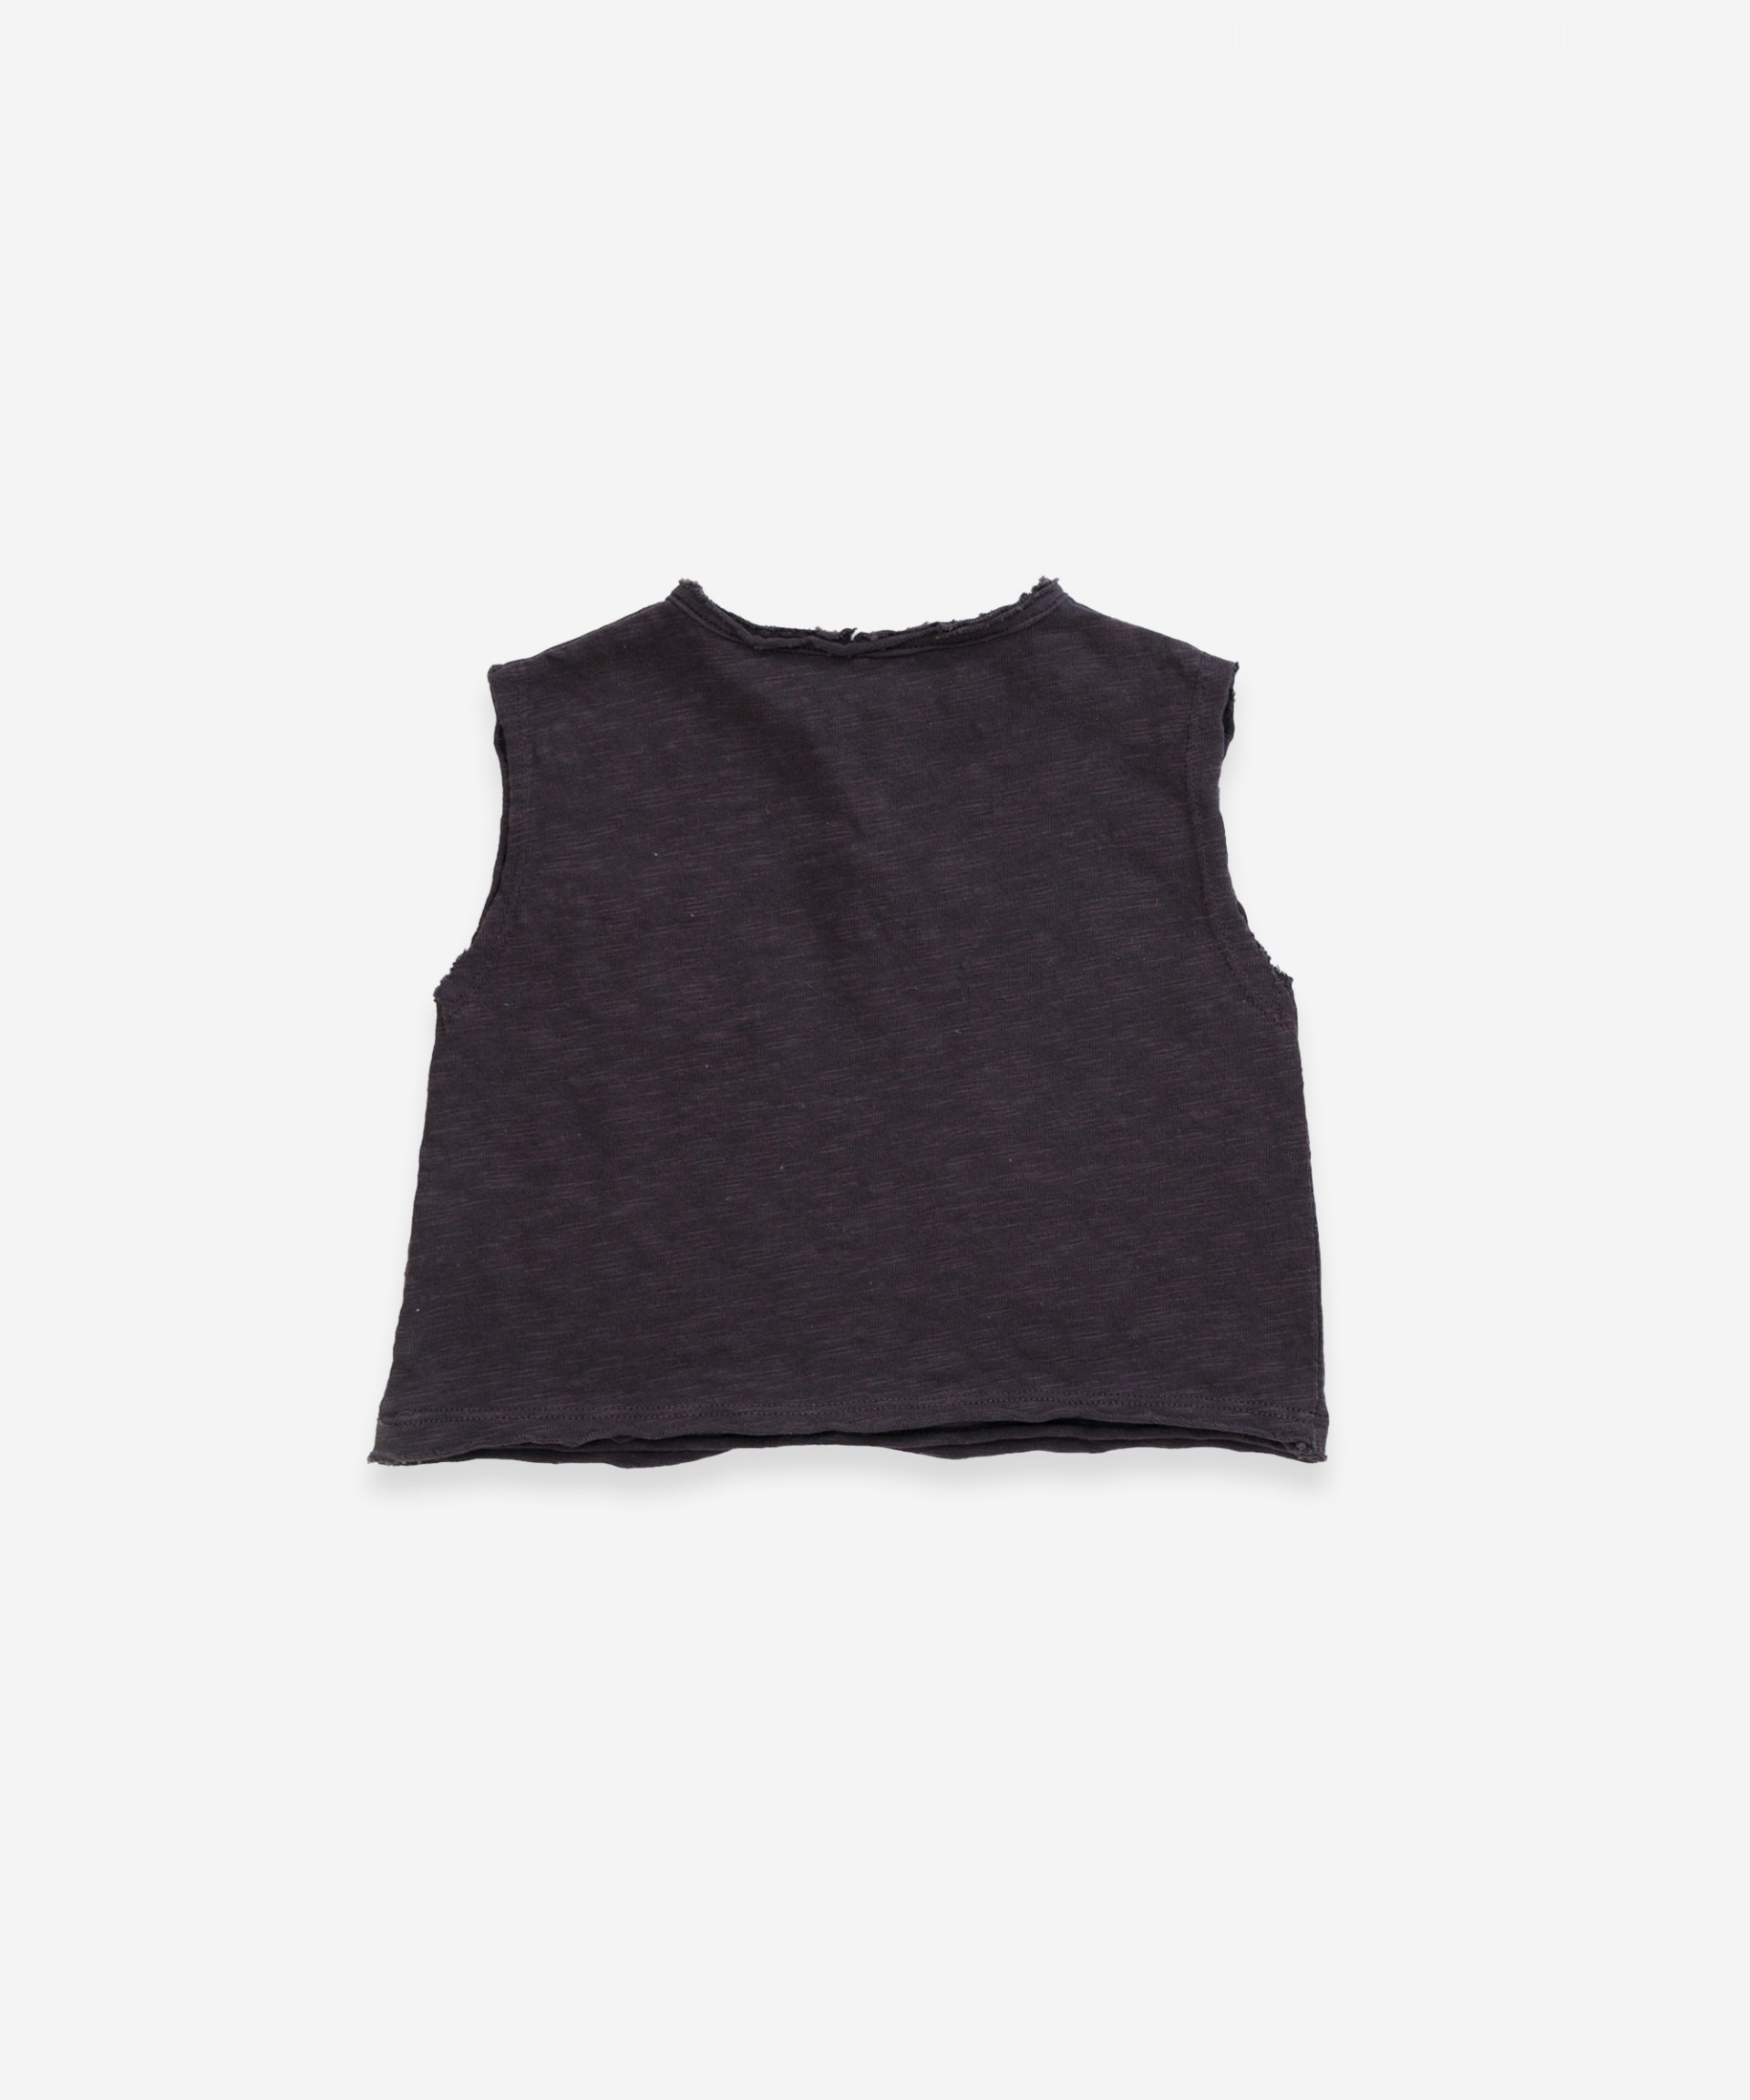 Camiseta sin mangas  de algodón orgánico| Weaving